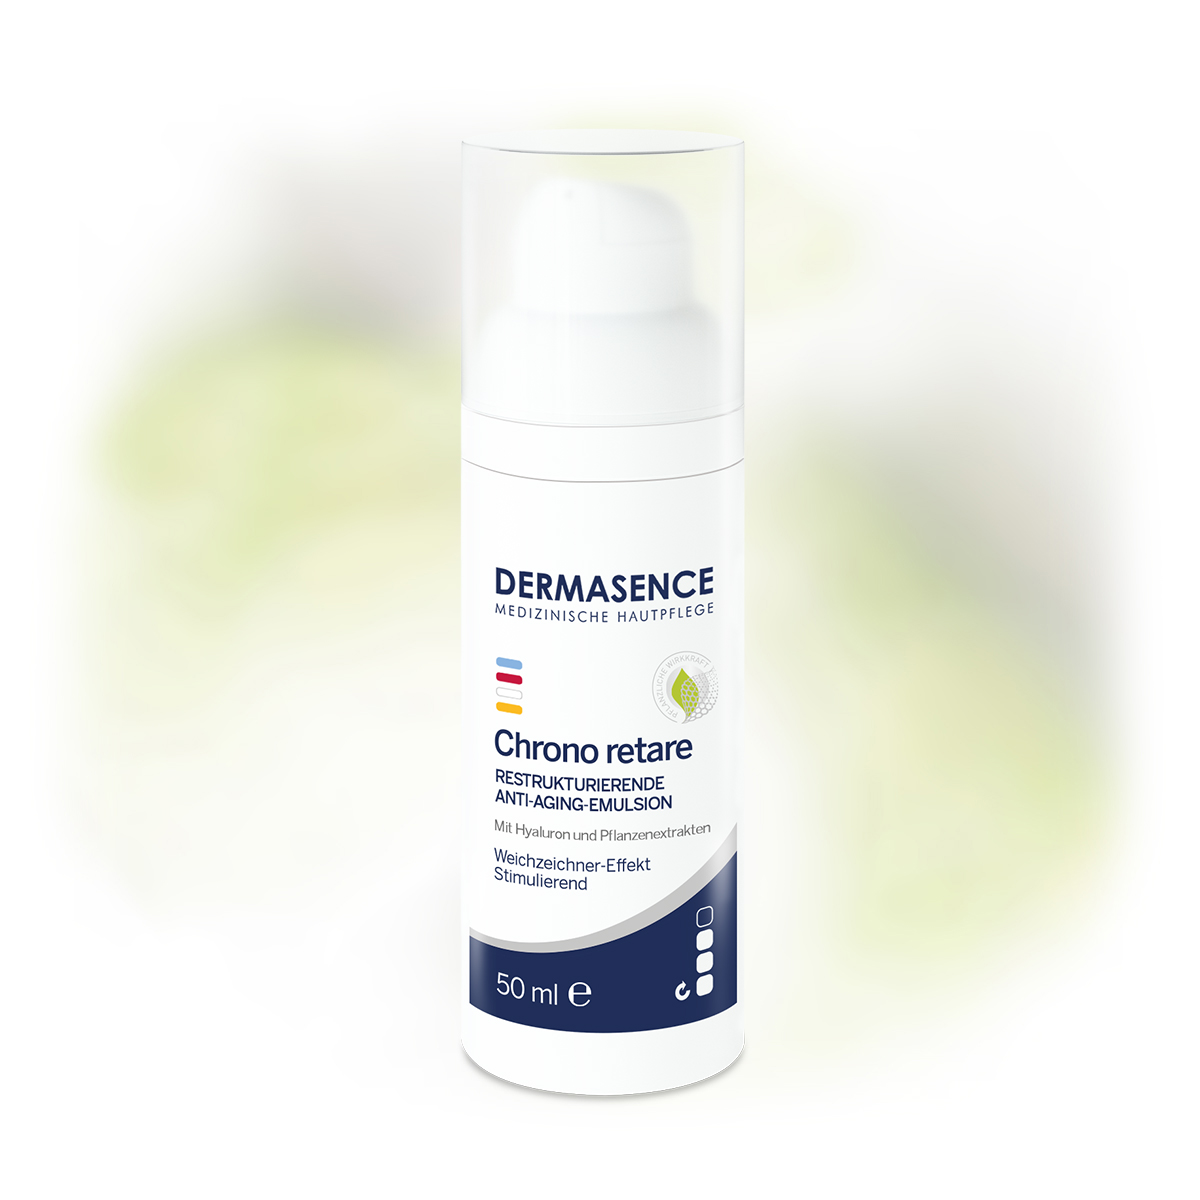 DERMASENCE Chrono retare Anti-ageing restructuring emulsion, 50 ml